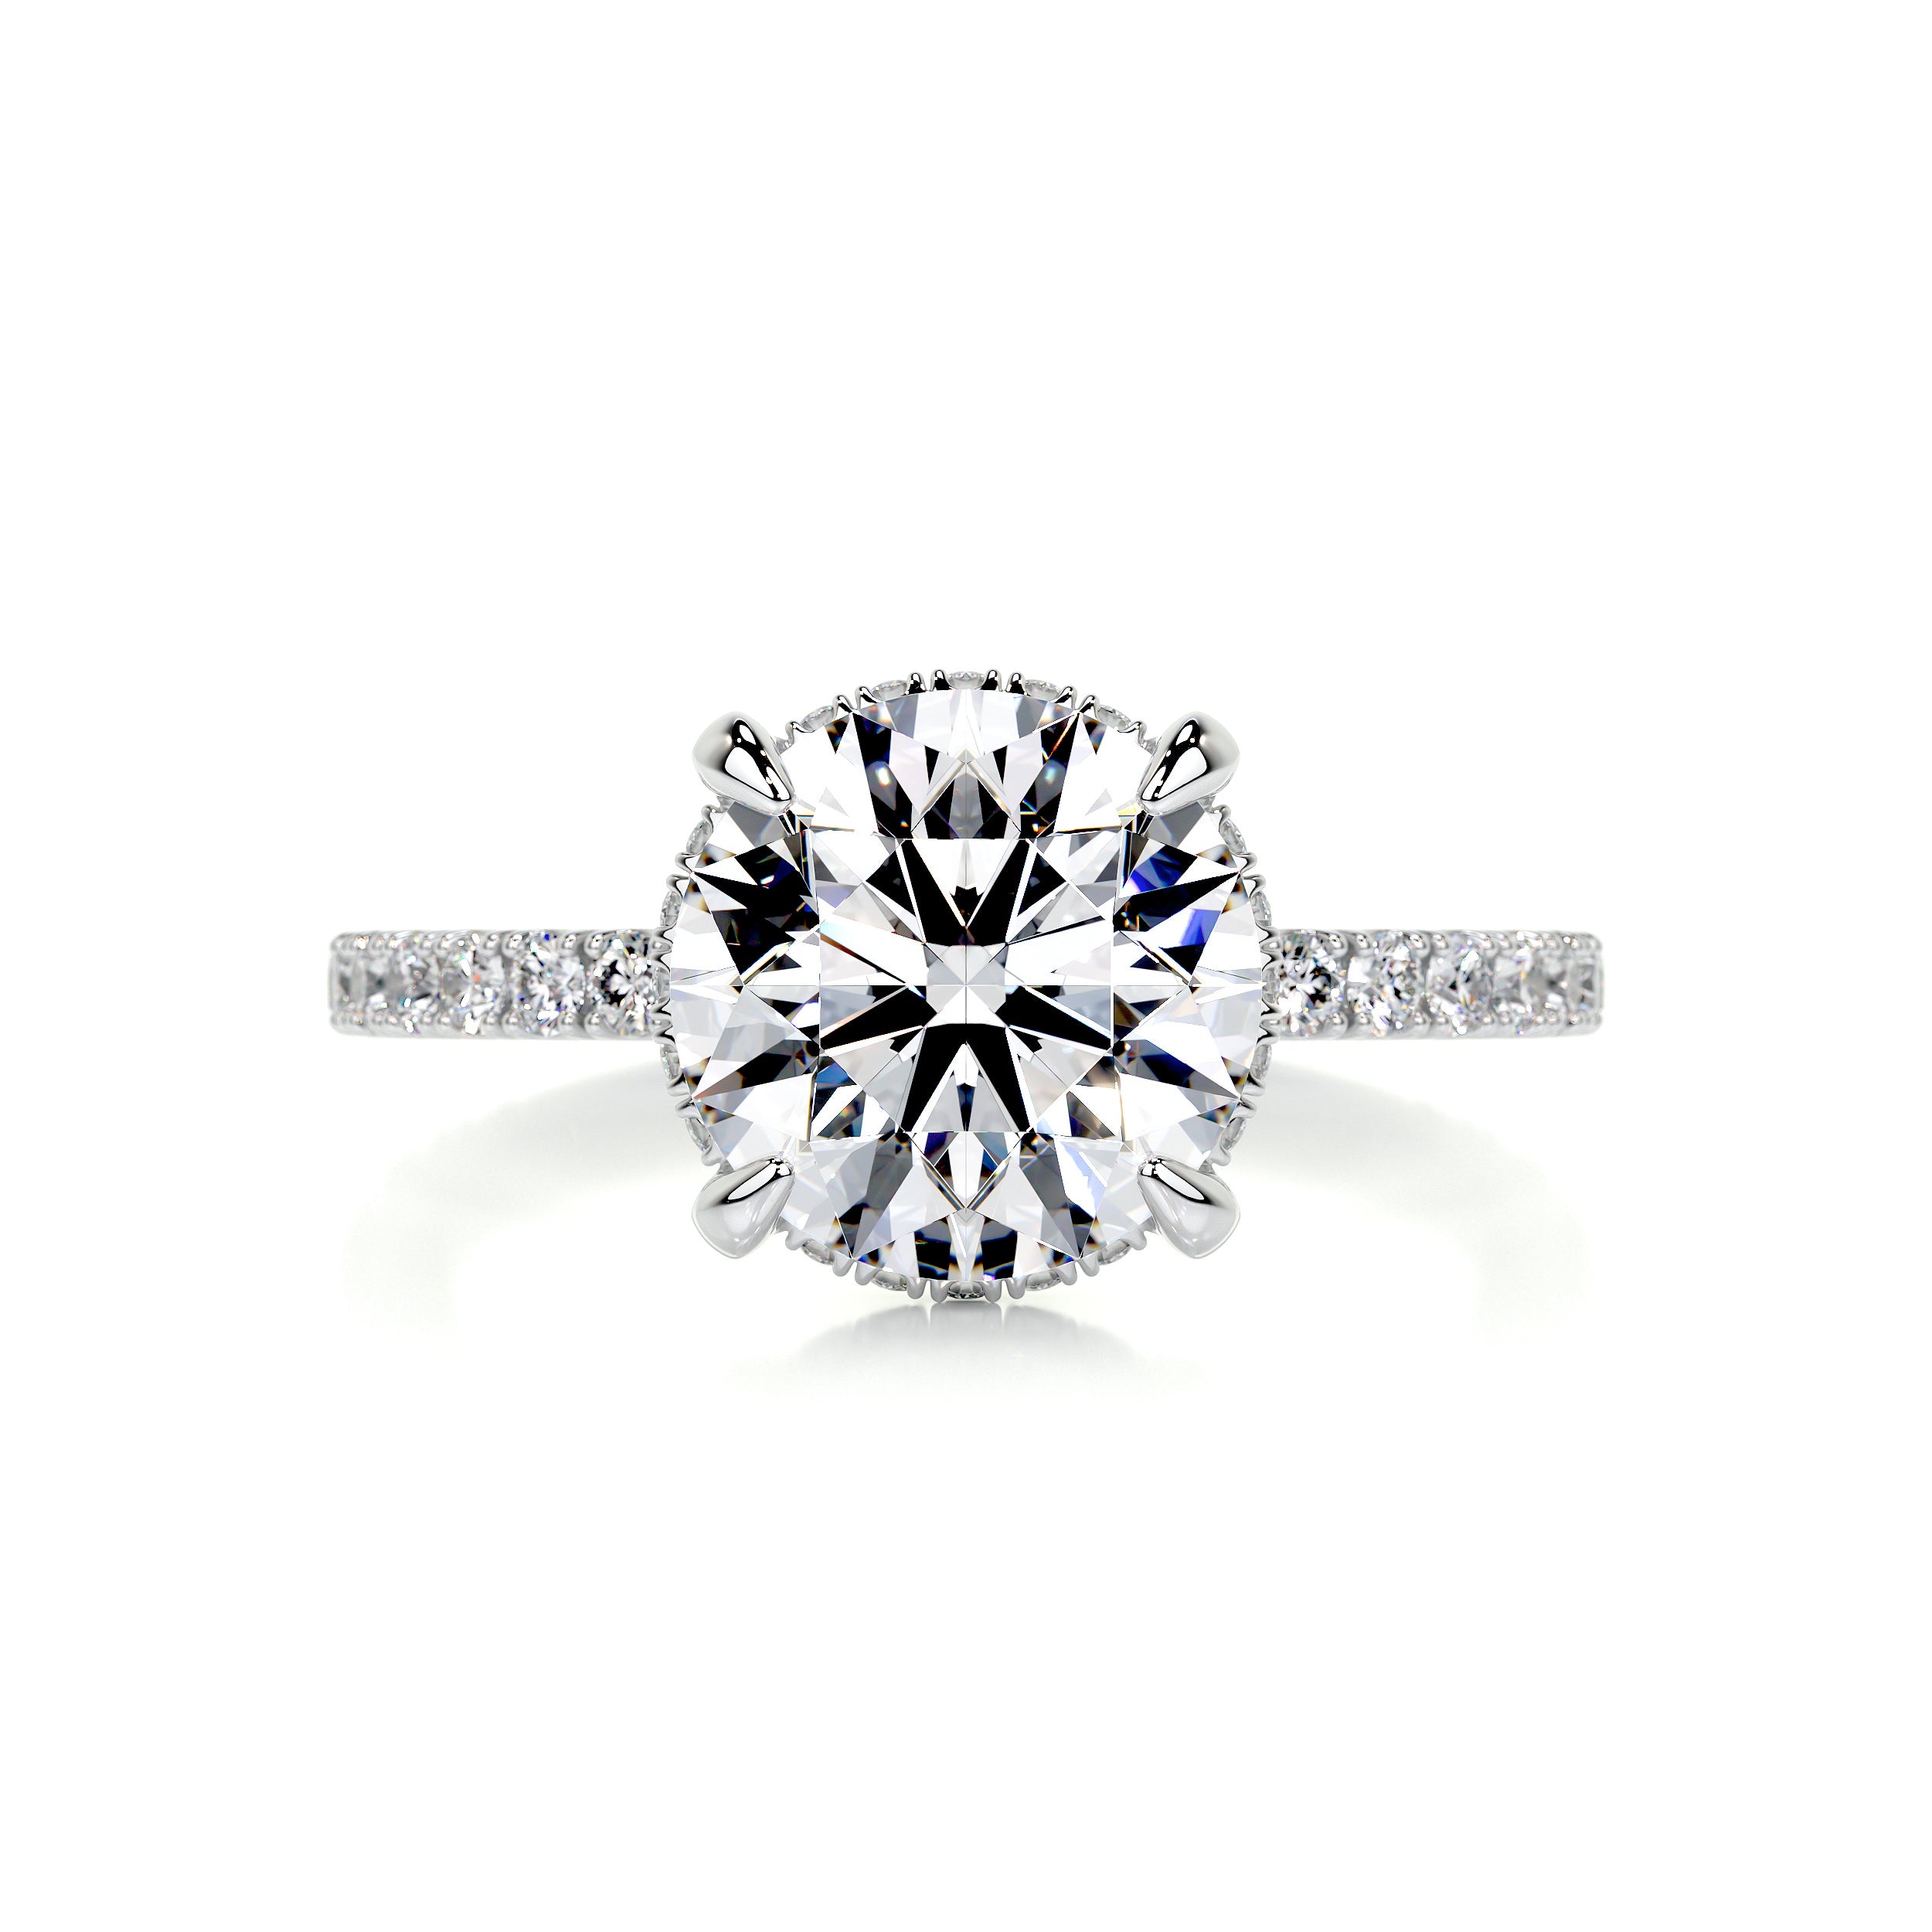 Valeria Diamond Engagement Ring   (3.00 Carat) -18K White Gold